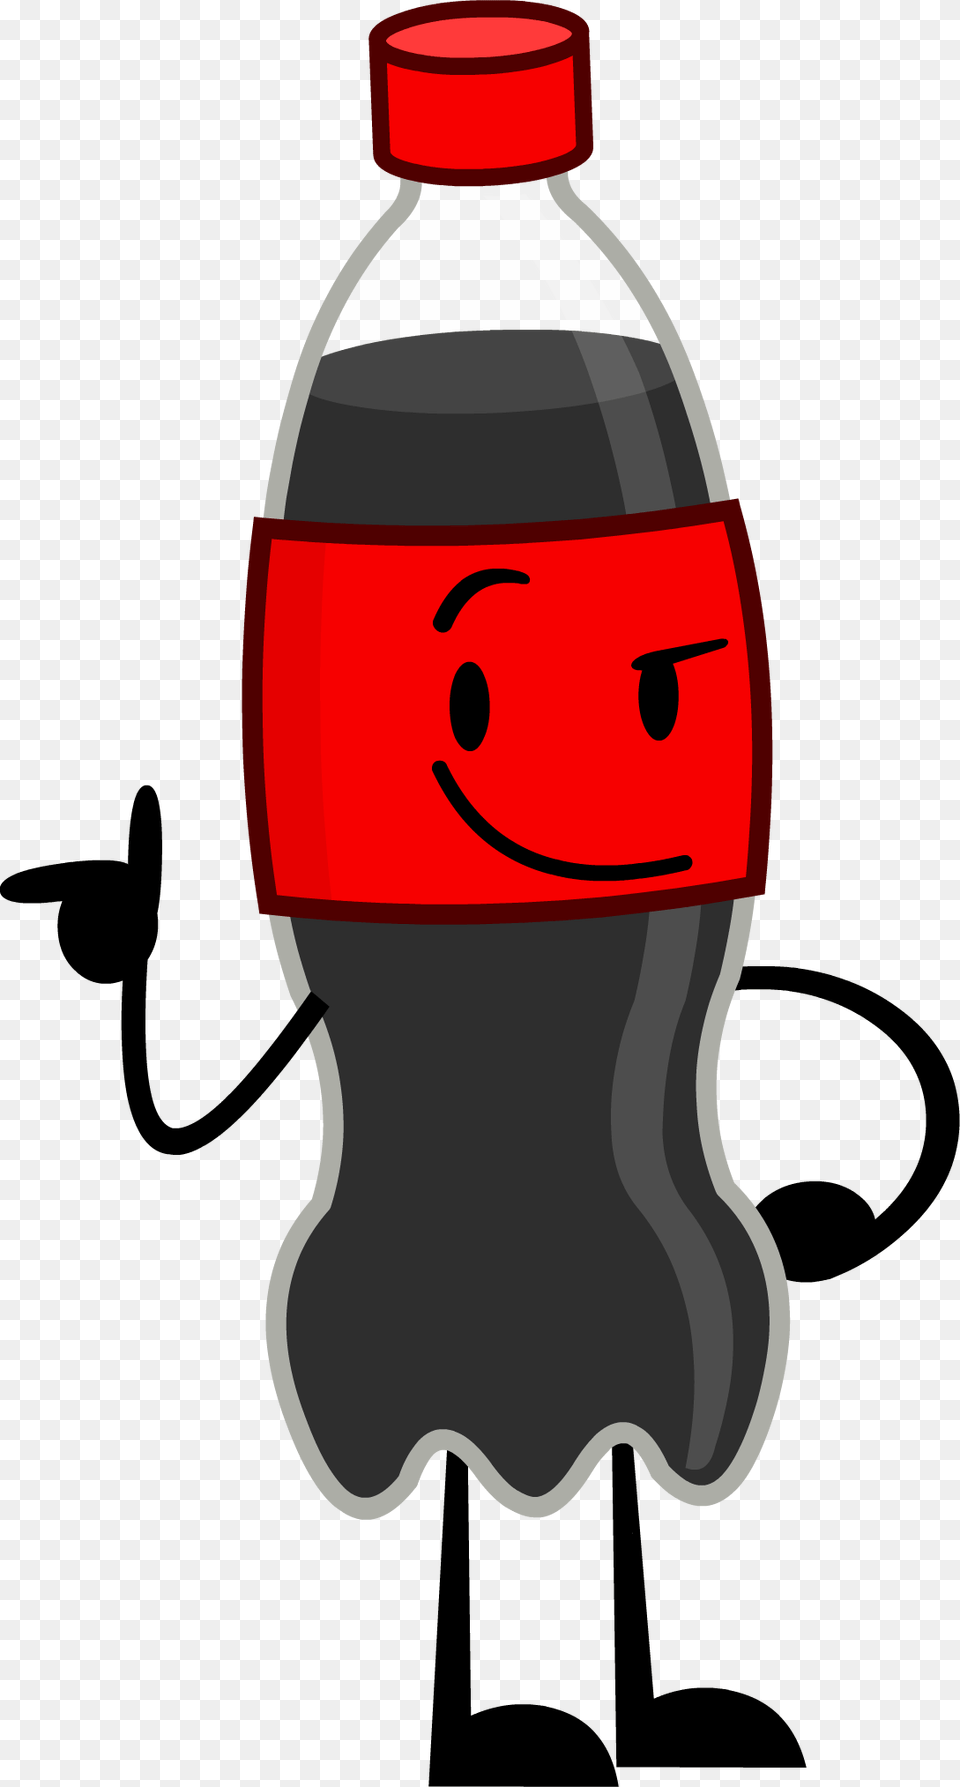 Coke Bottle Idle Cool Insanity Coke Bottle, Beverage, Soda, Shaker Png Image